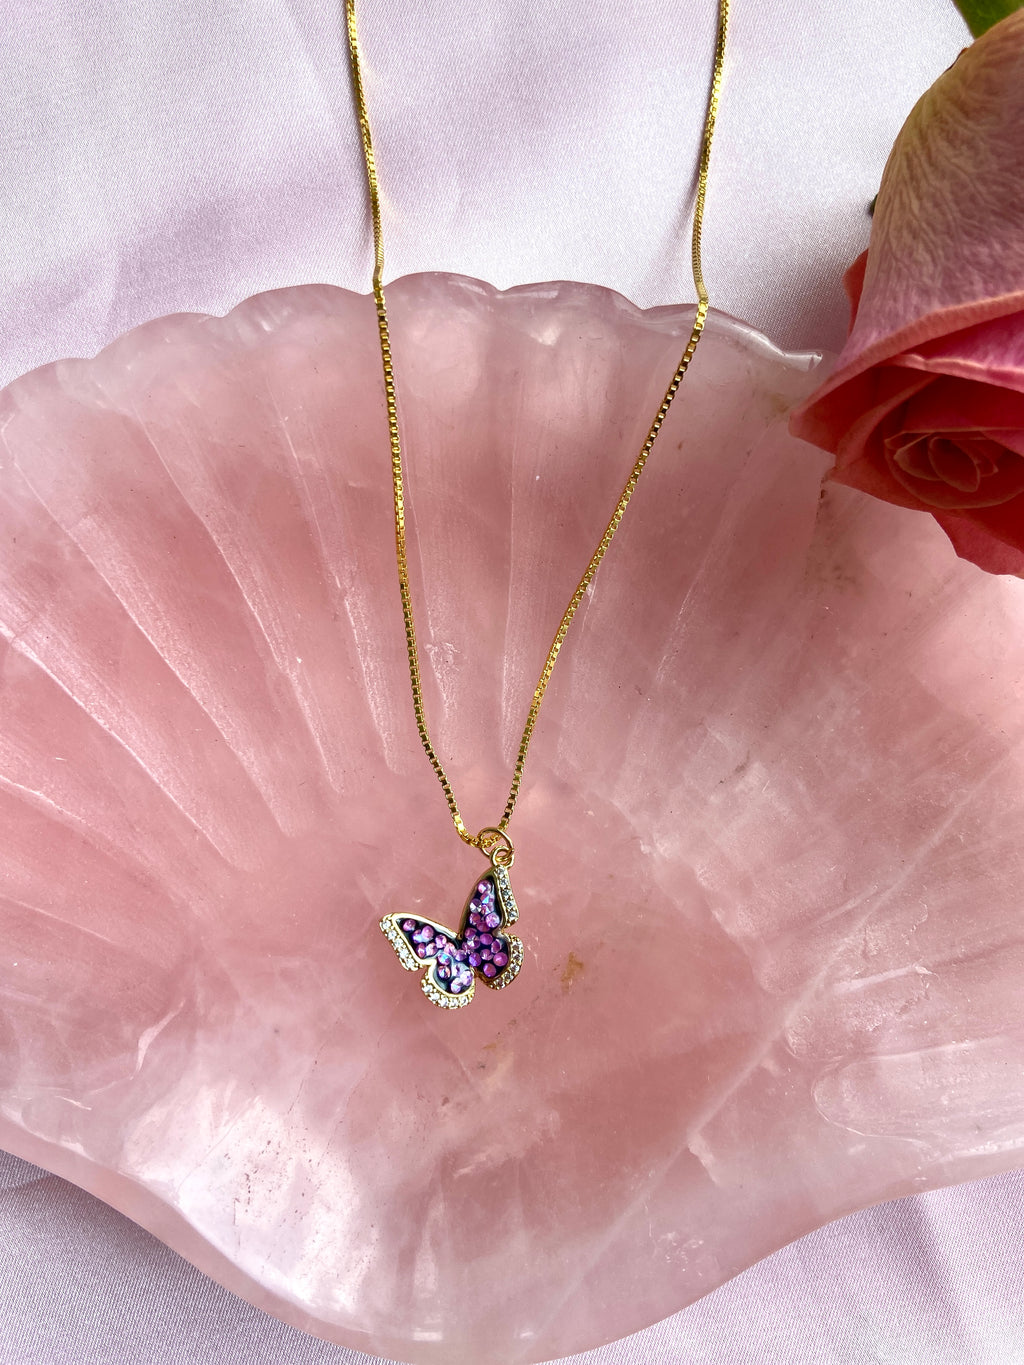 Spread Your Wings Purple Butterfly Necklace